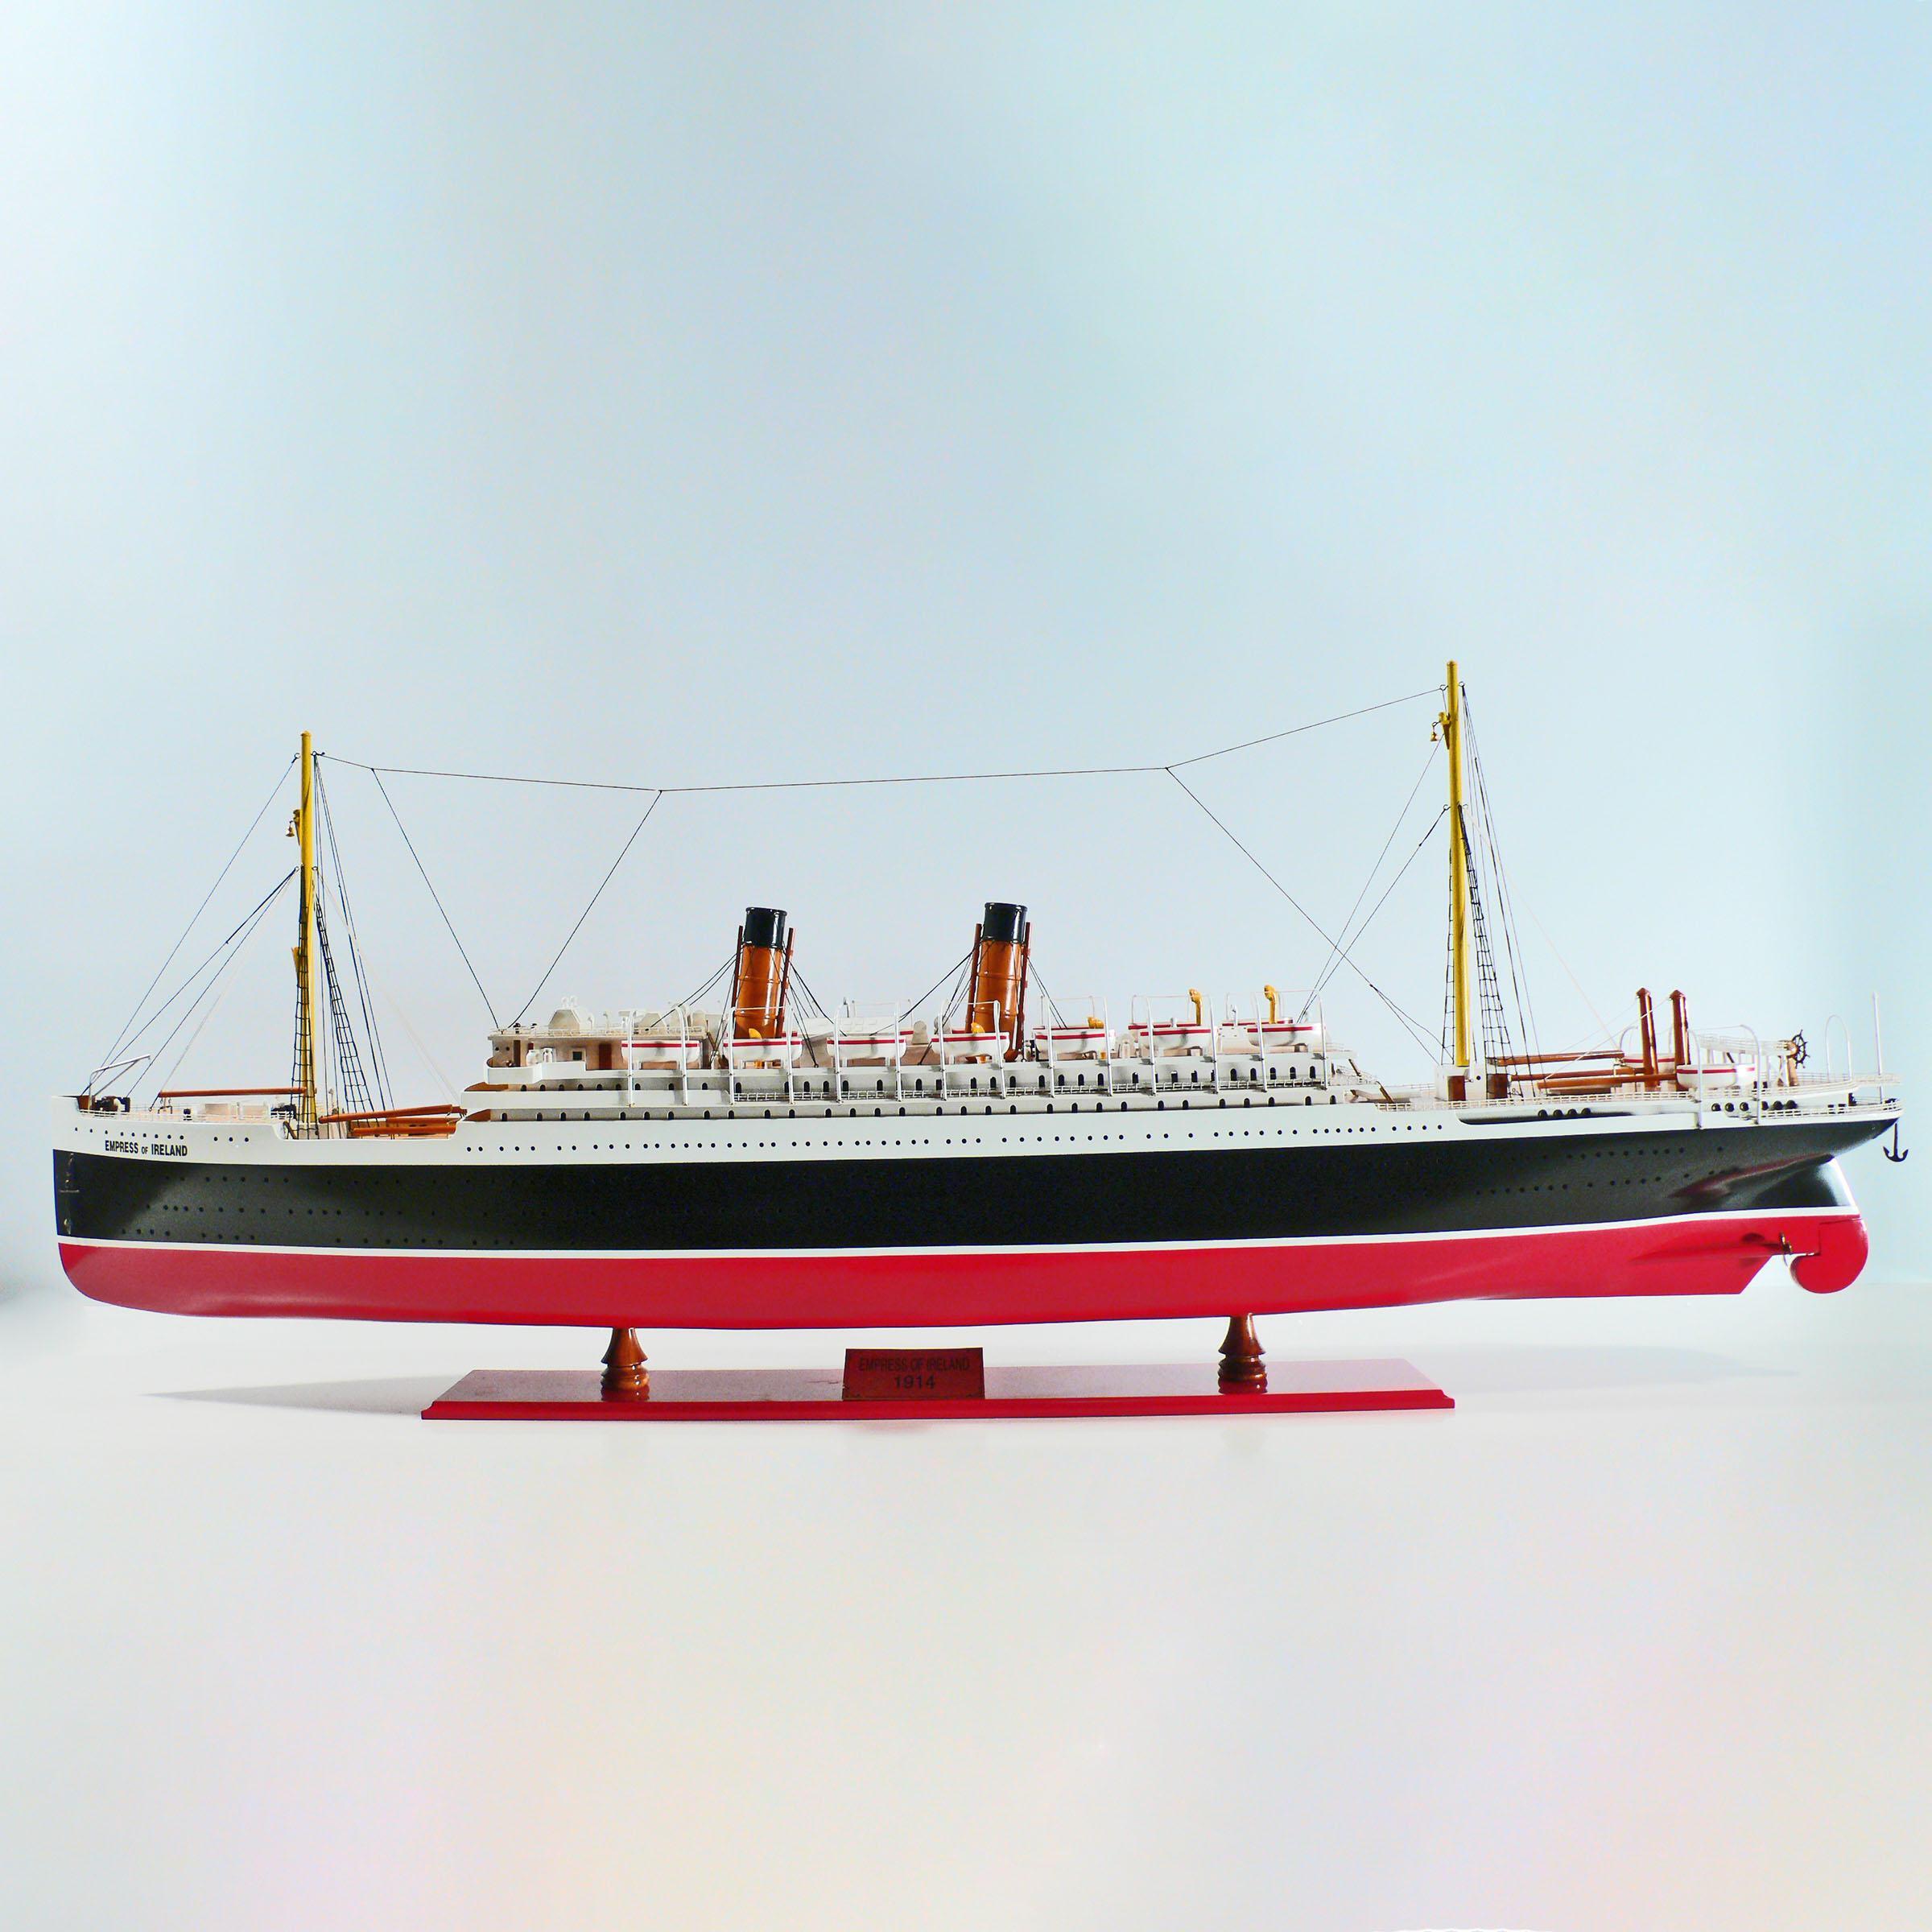 Empress Of Ireland Wooden Ships Model Empress Of Ireland Model Ships 